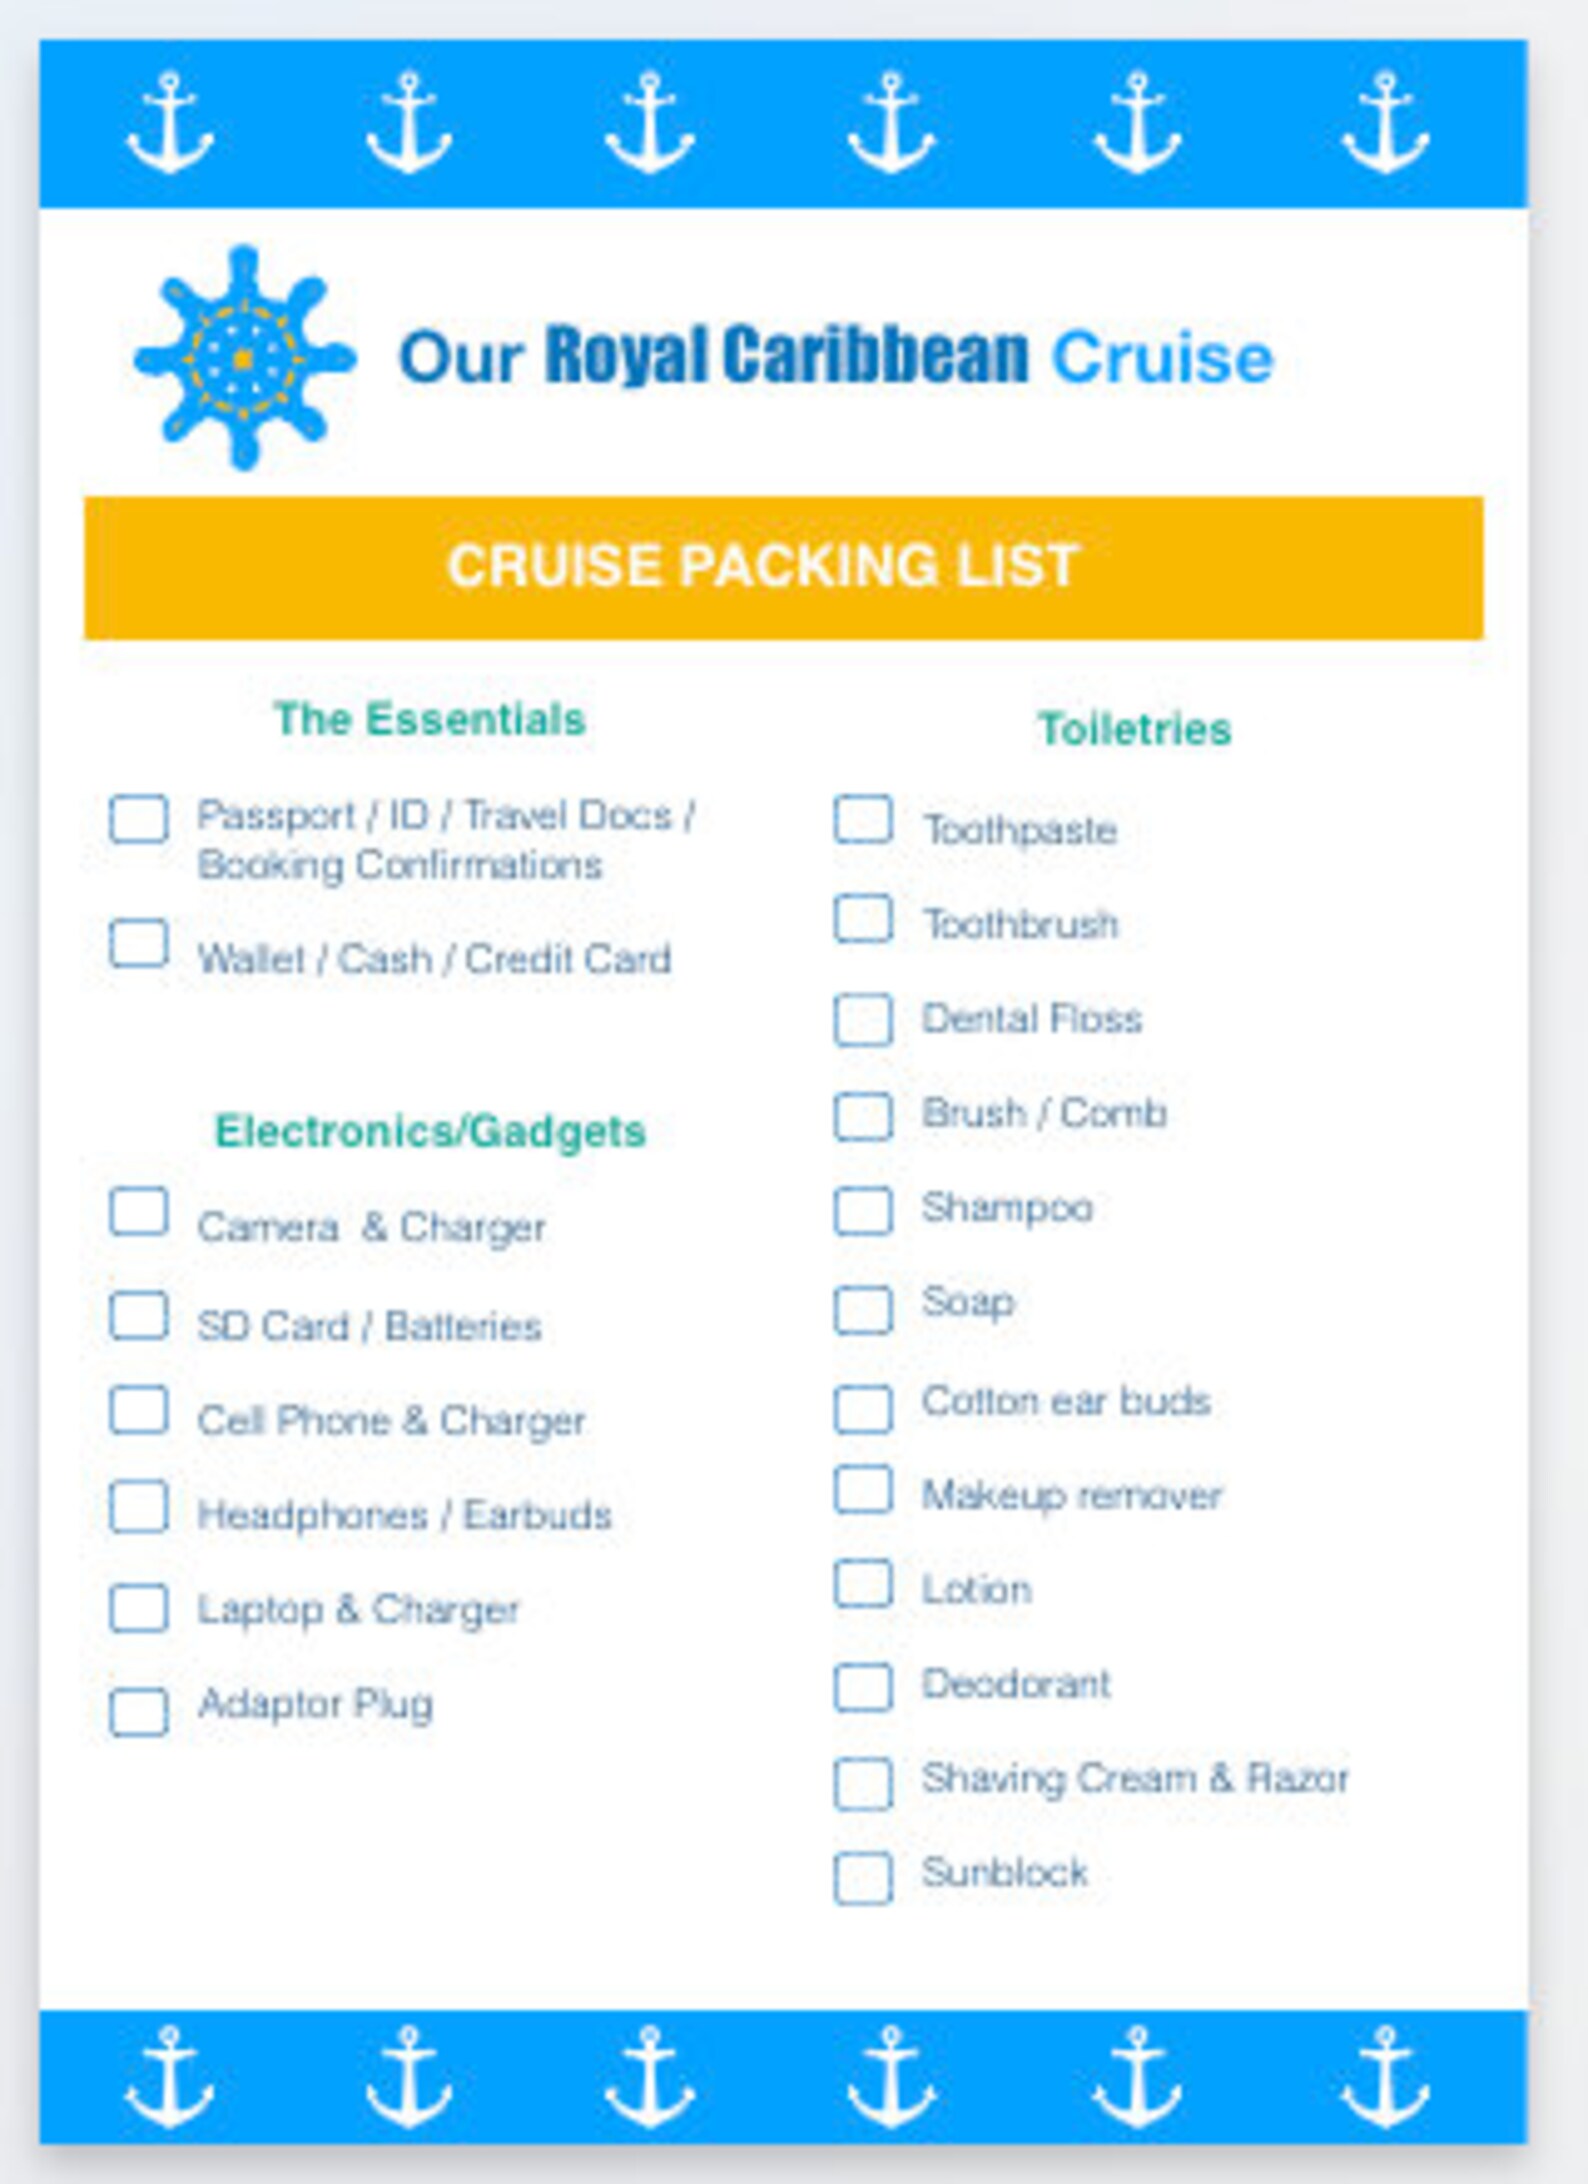 Royal Caribbean Cruise Planner Vacation Cruise Printable | Etsy